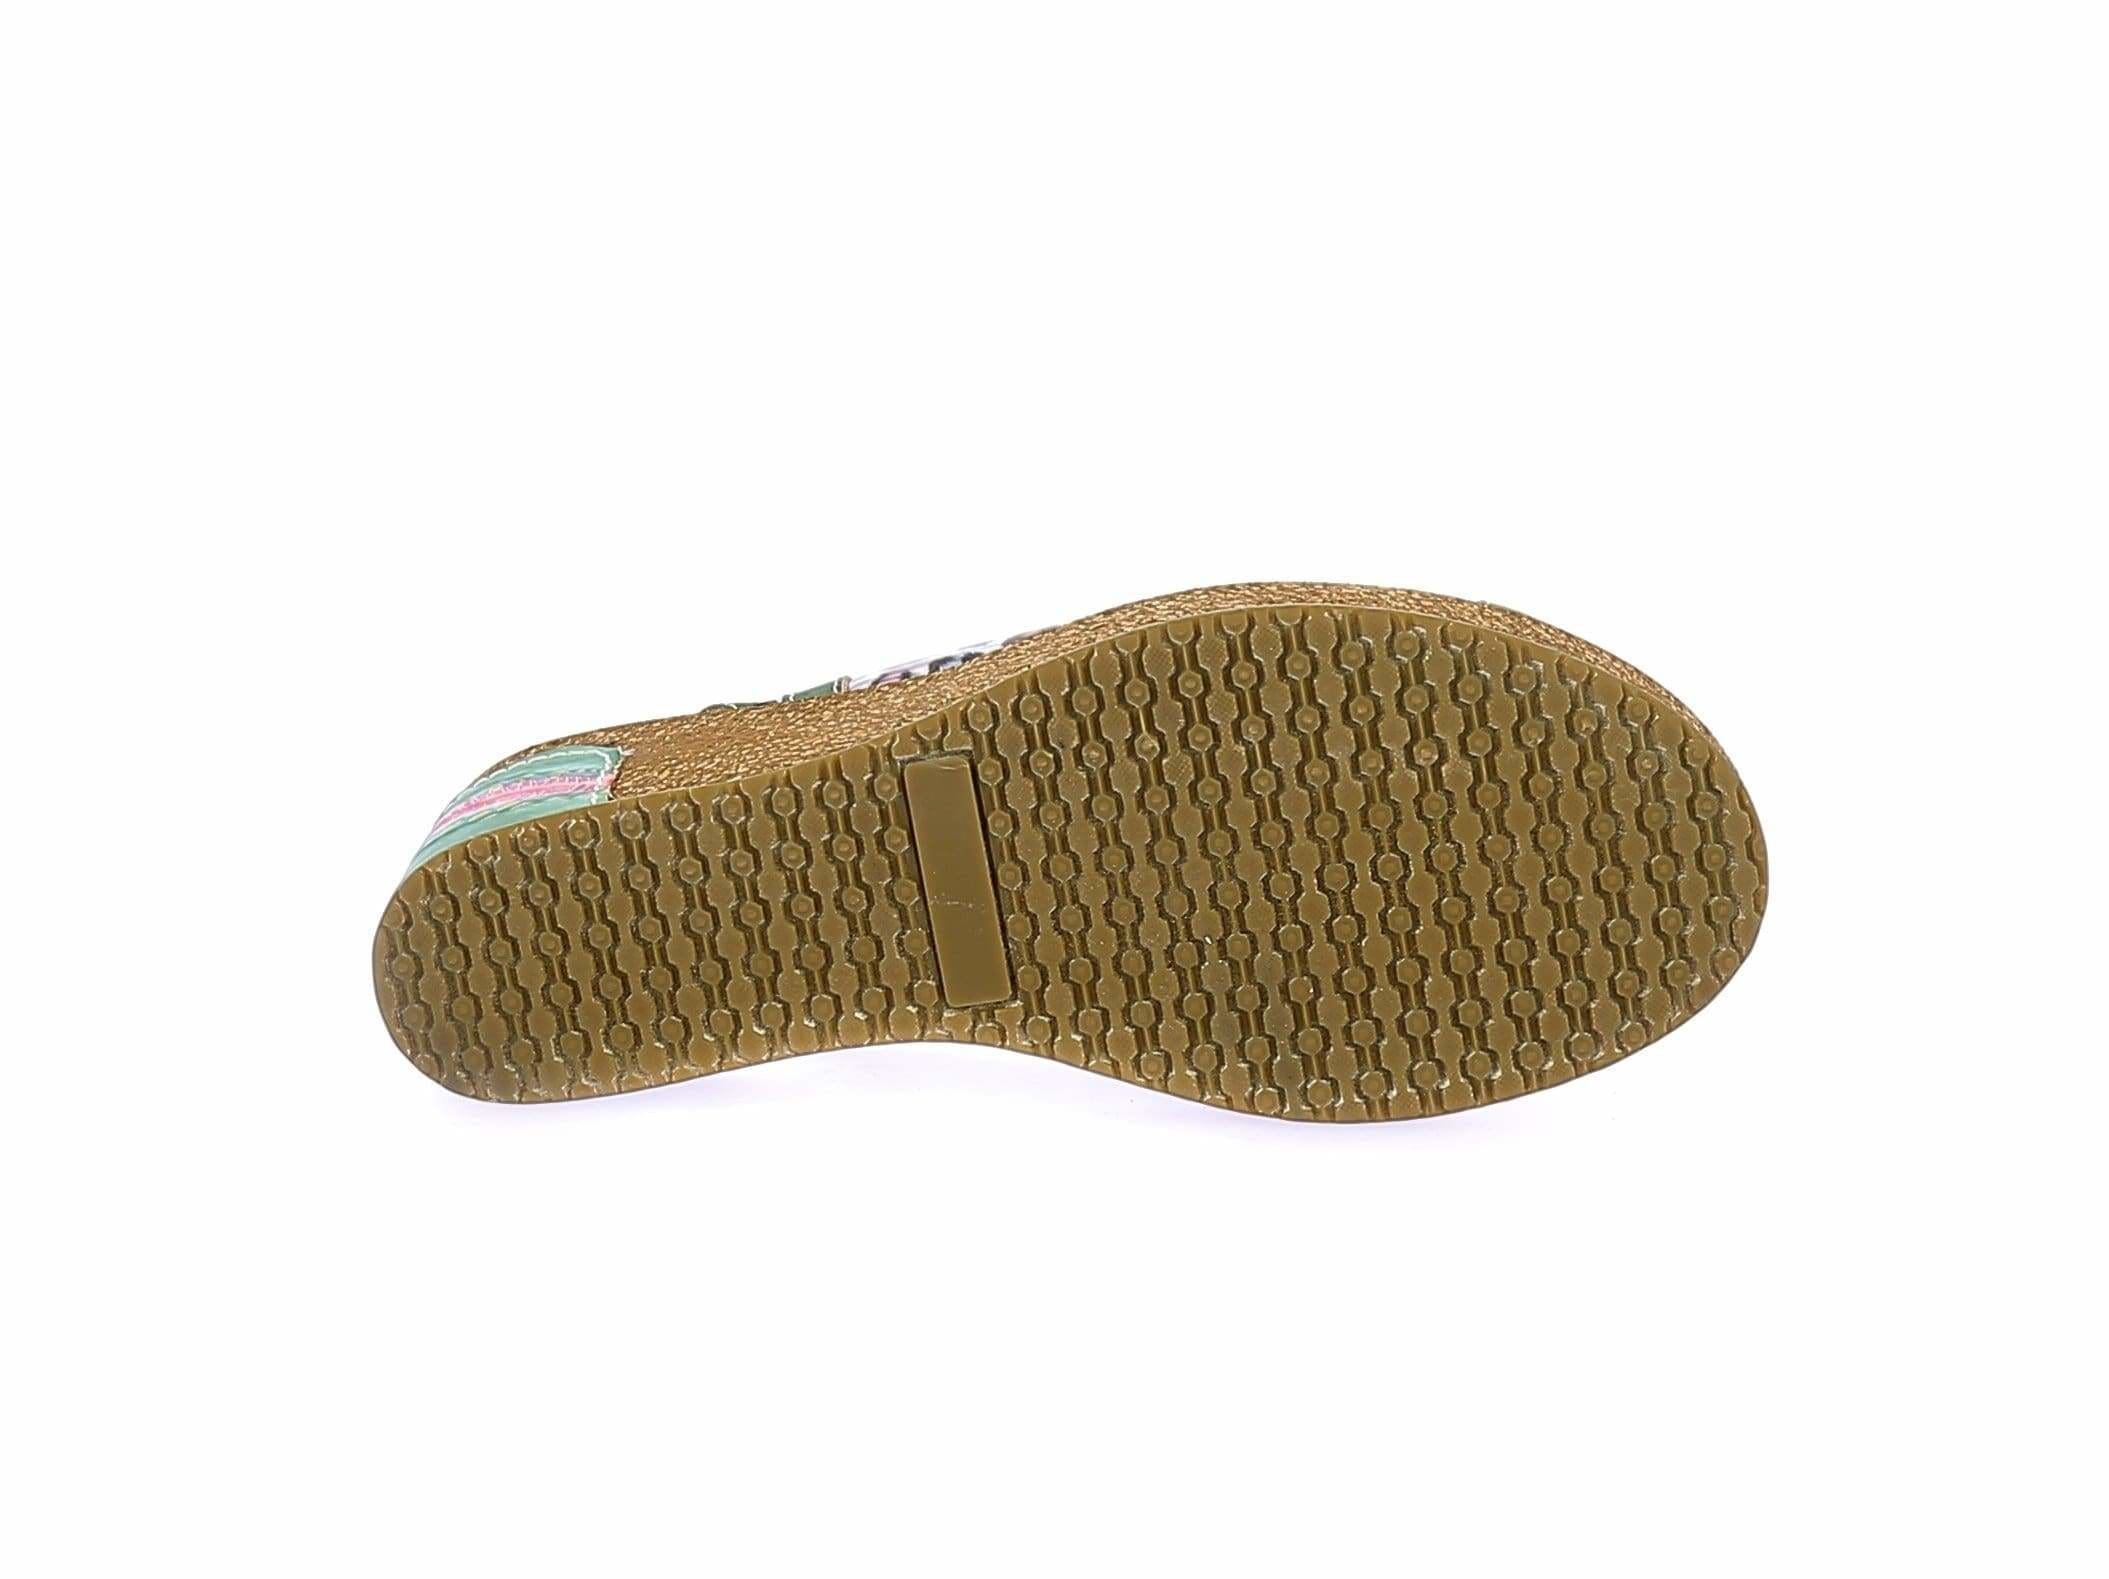 HACKEO 11 Skor - Sandal